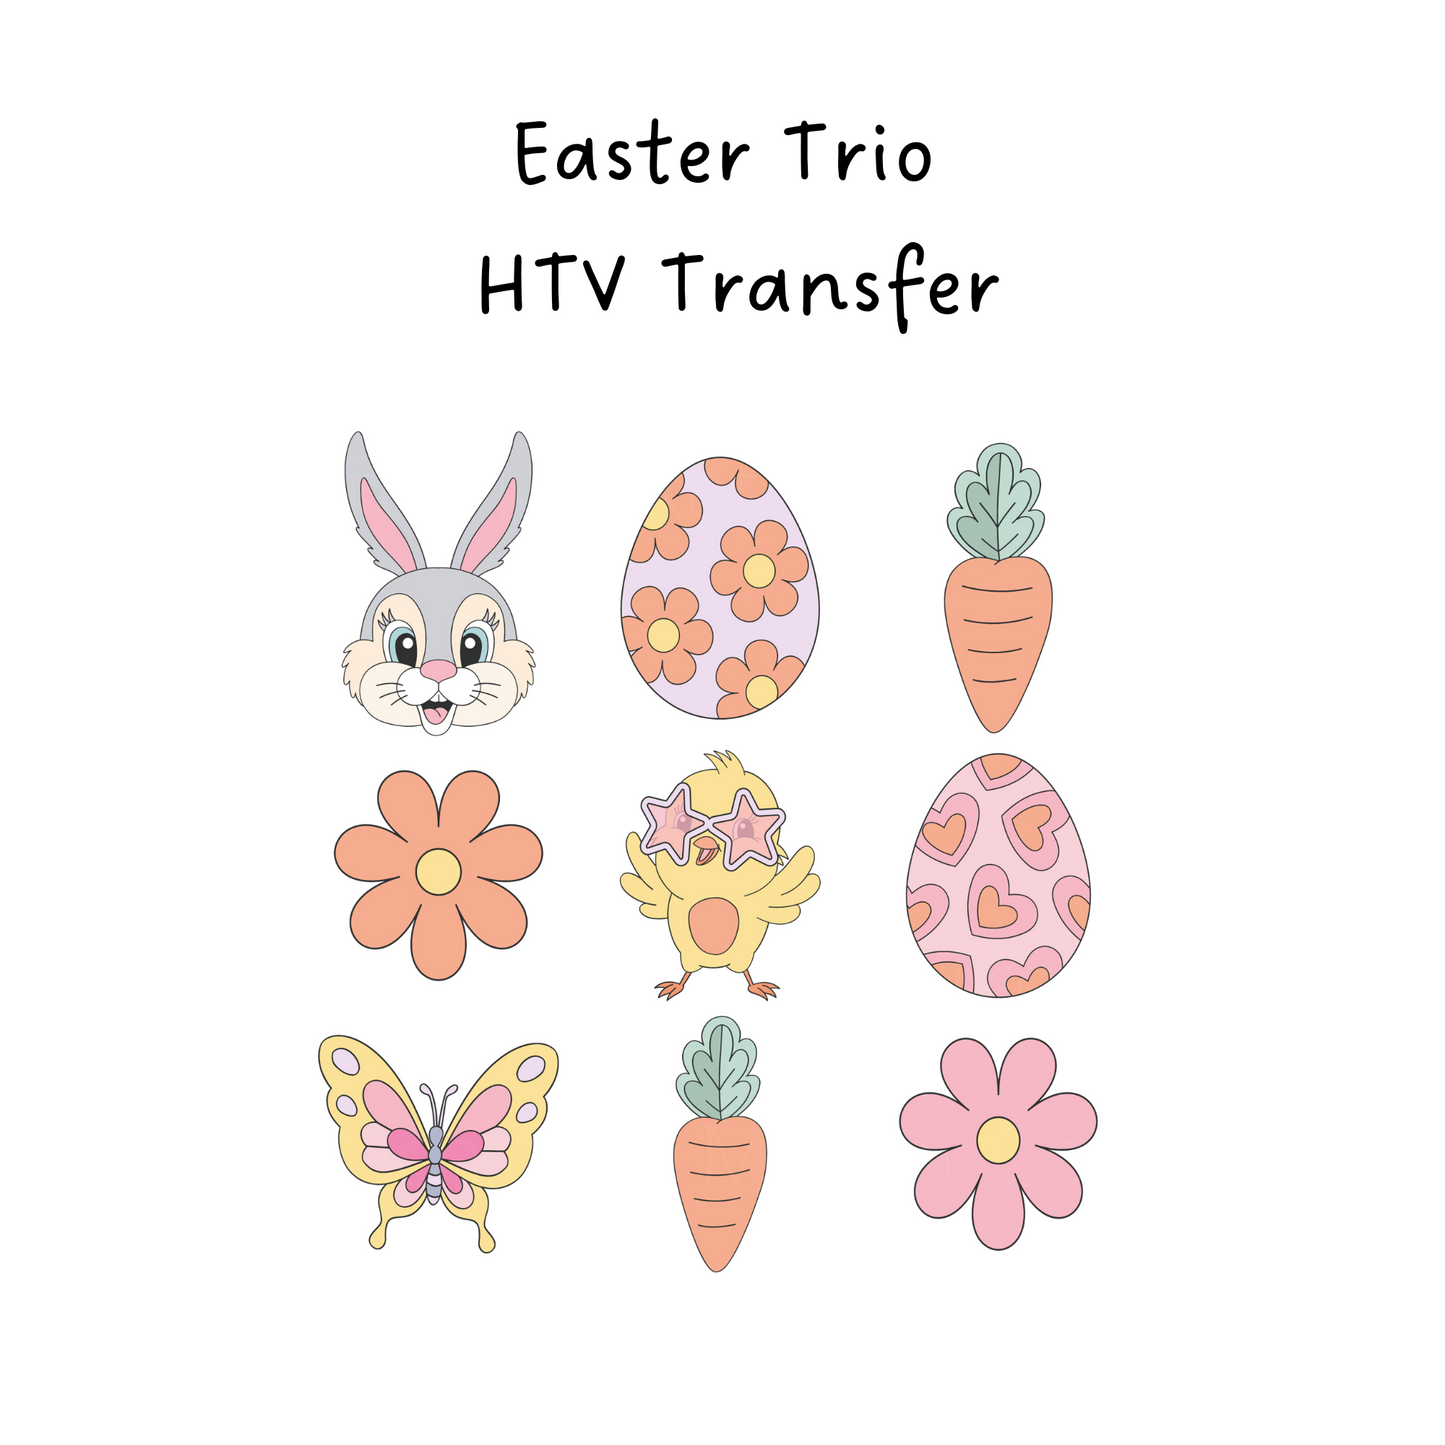 Easter Trio HTV Transfer